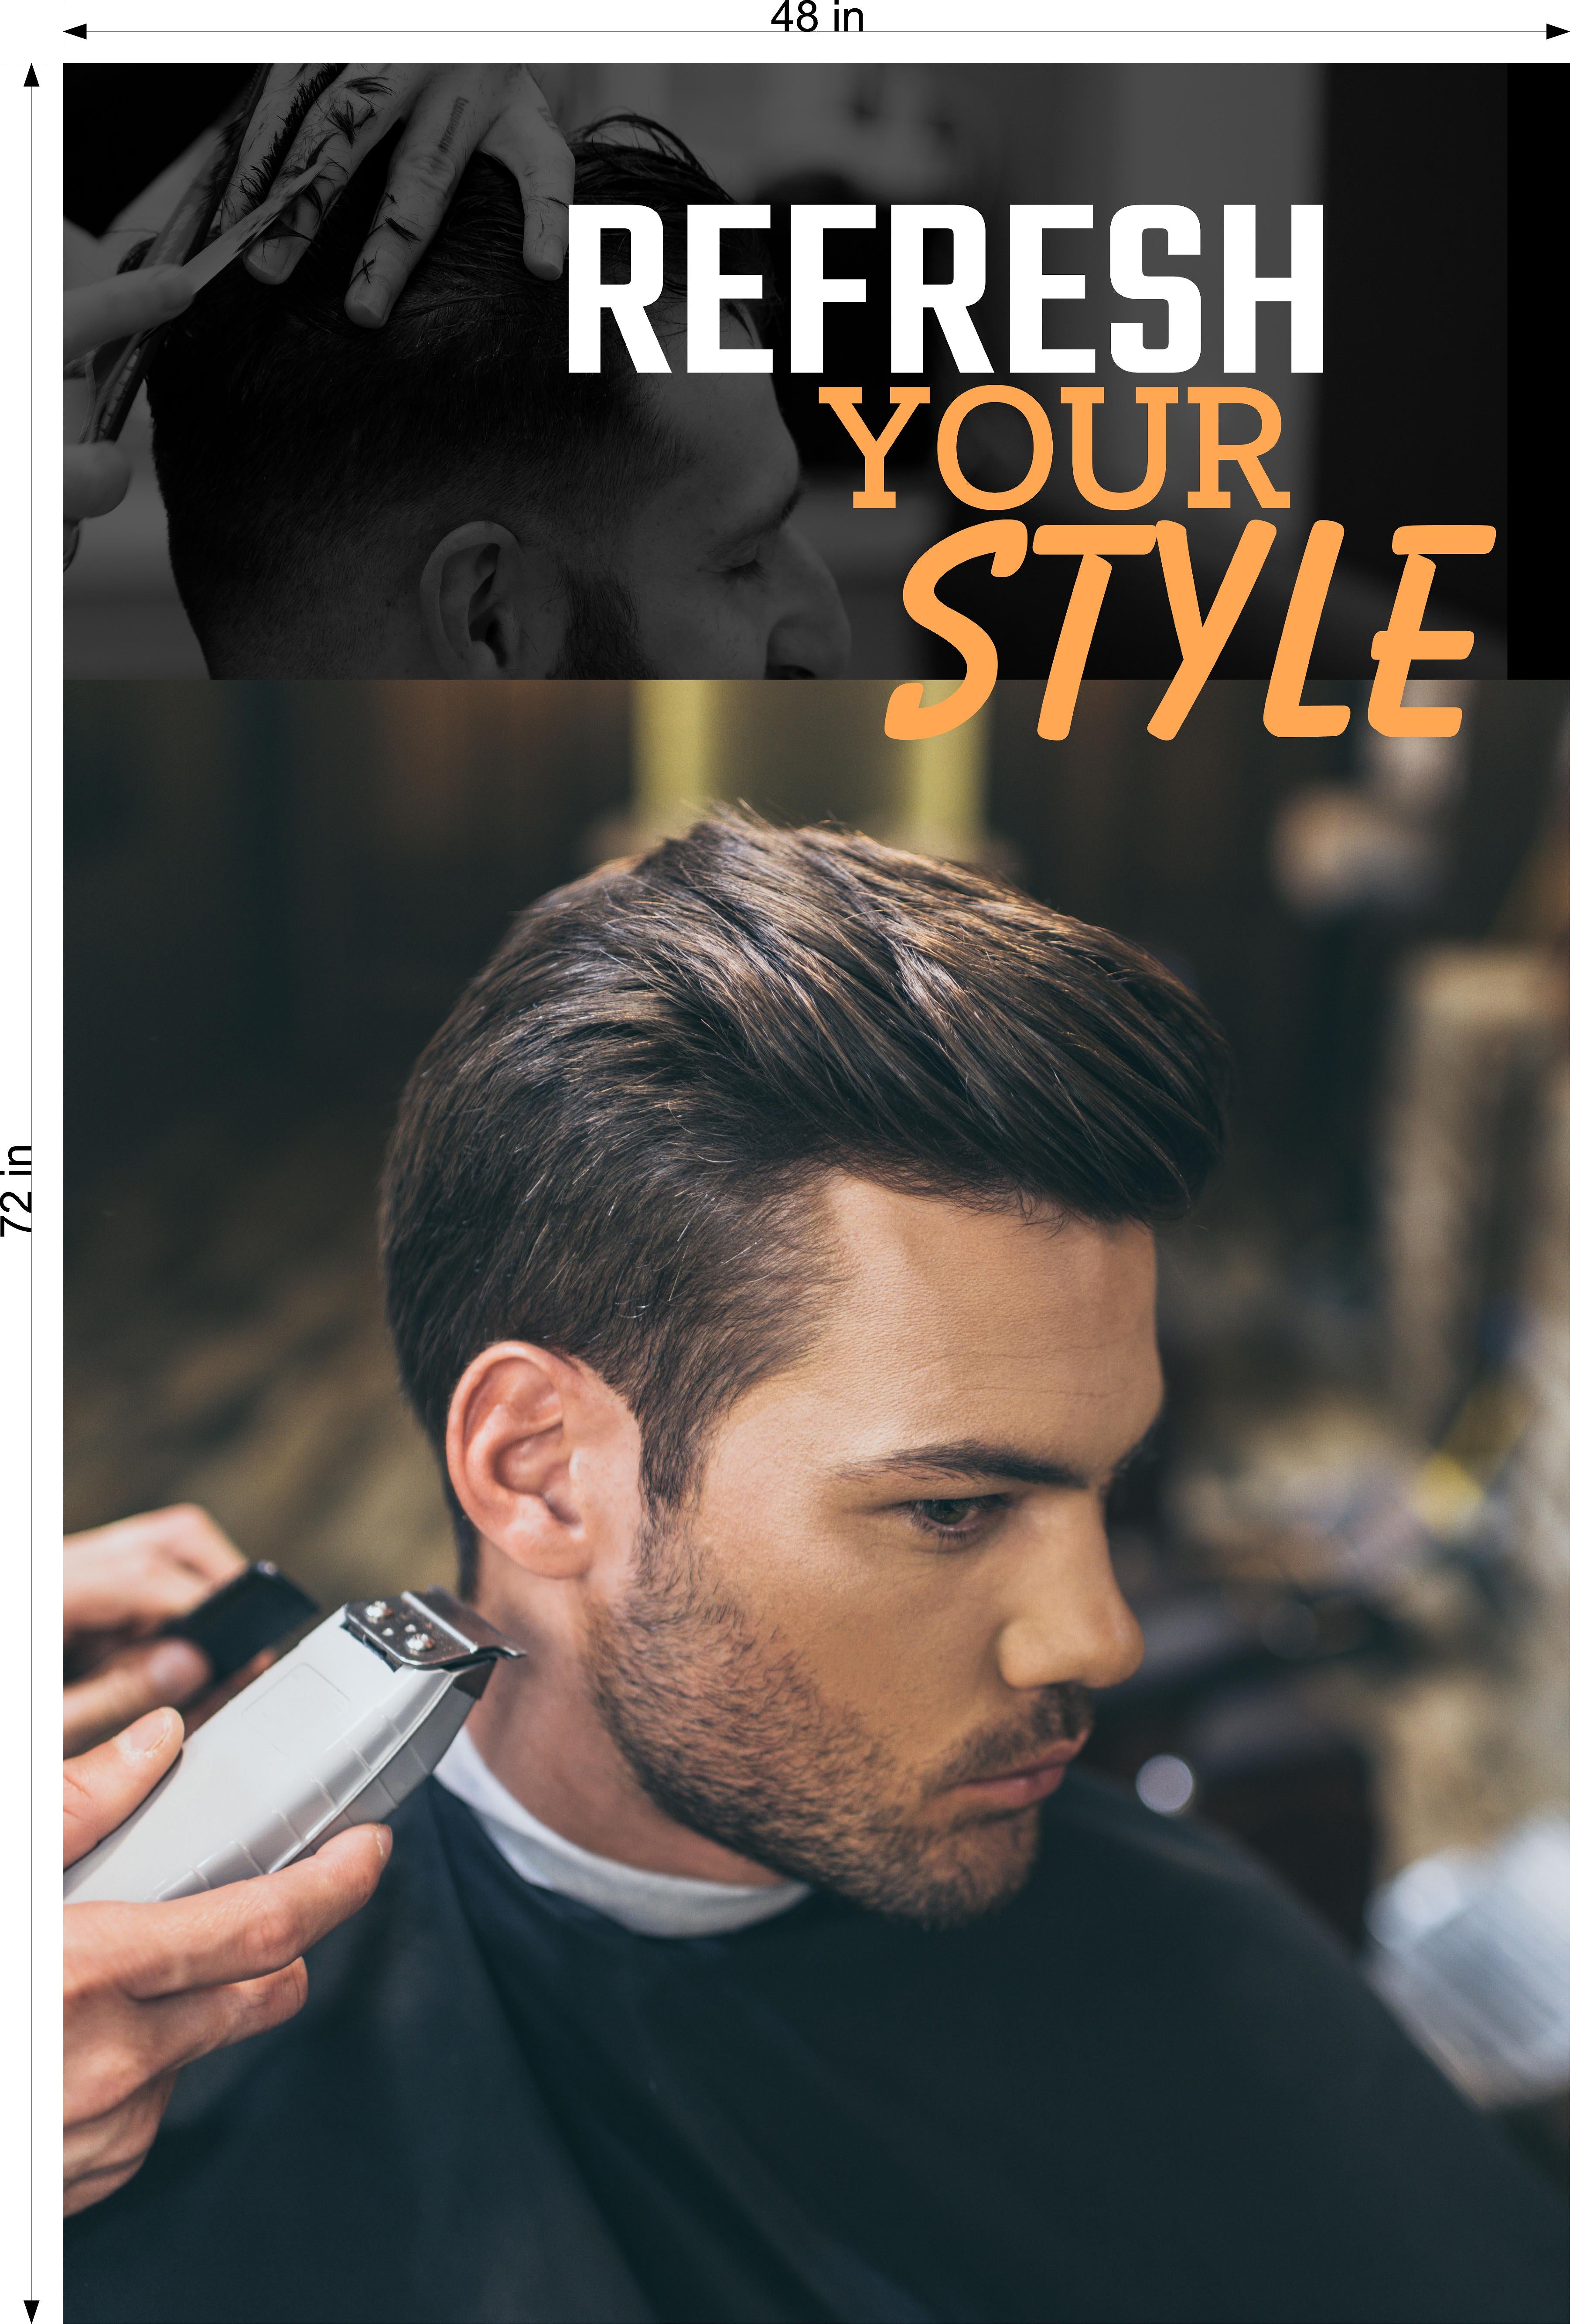 Barber 02 Photo-Realistic Paper Poster Premium Inside Sign Wall Window Non-Laminated Man Men Boy Beard Haircut Vertical